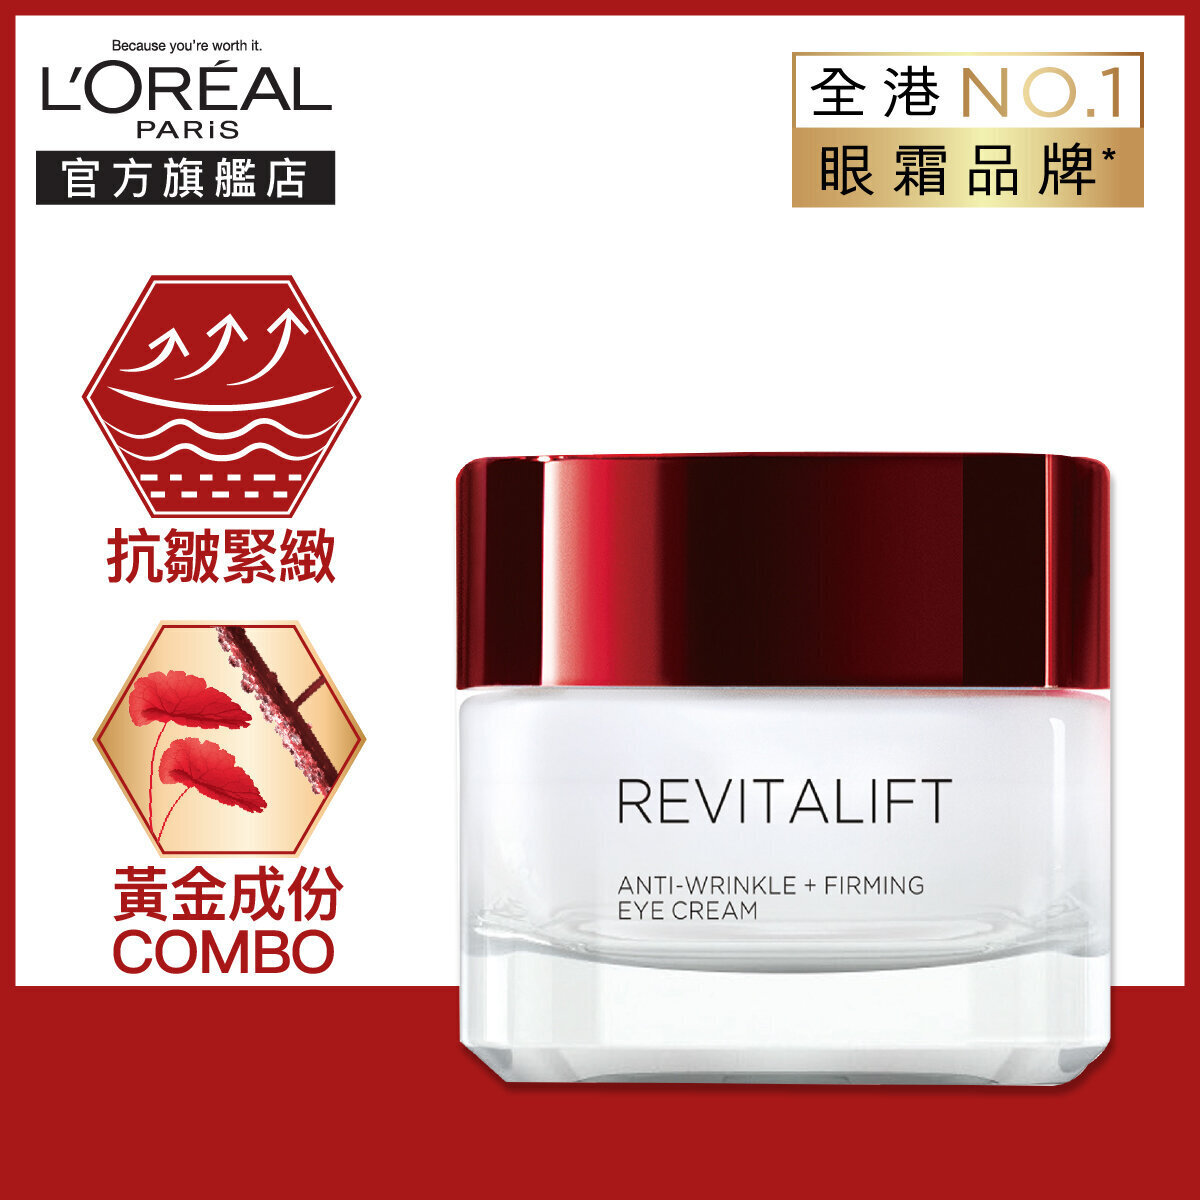 Revitalift Anti-Wrinkle + Firming Eye Cream 15ml [Anti-Aging + Lifting] *967784